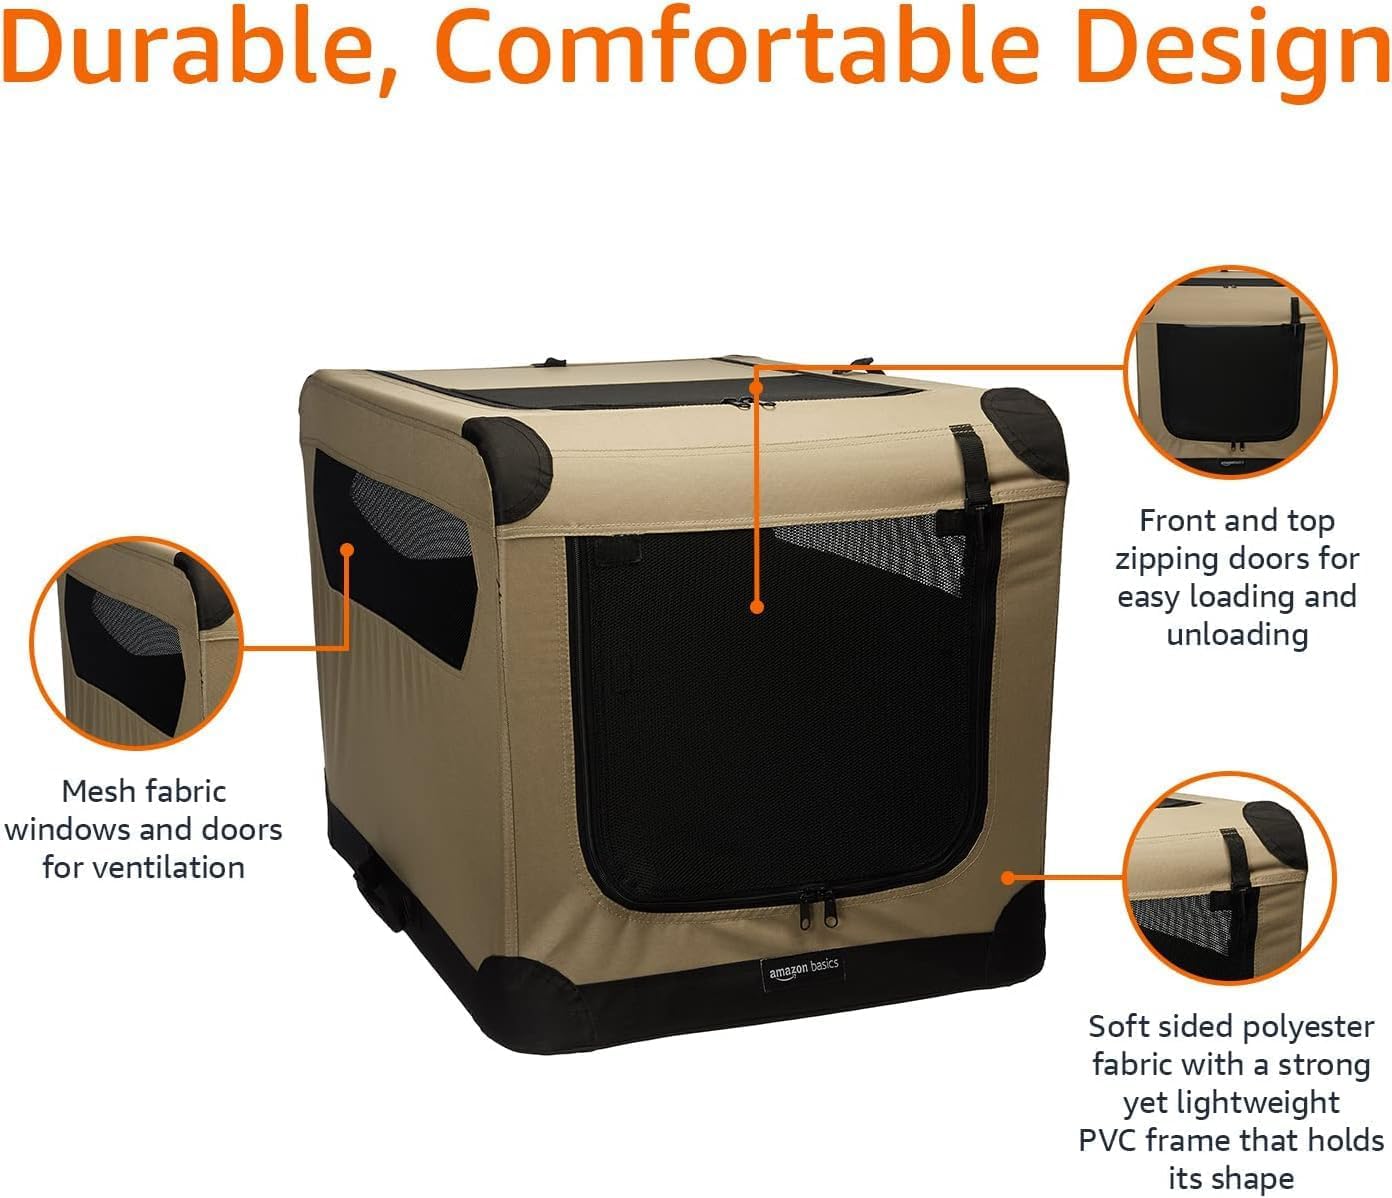 Amazon Basics 2-Door Portable Soft-Sided Folding Soft Dog Travel Crate Kennel, Medium (29.92 x 21.3 x 21.3 Inches), Tan